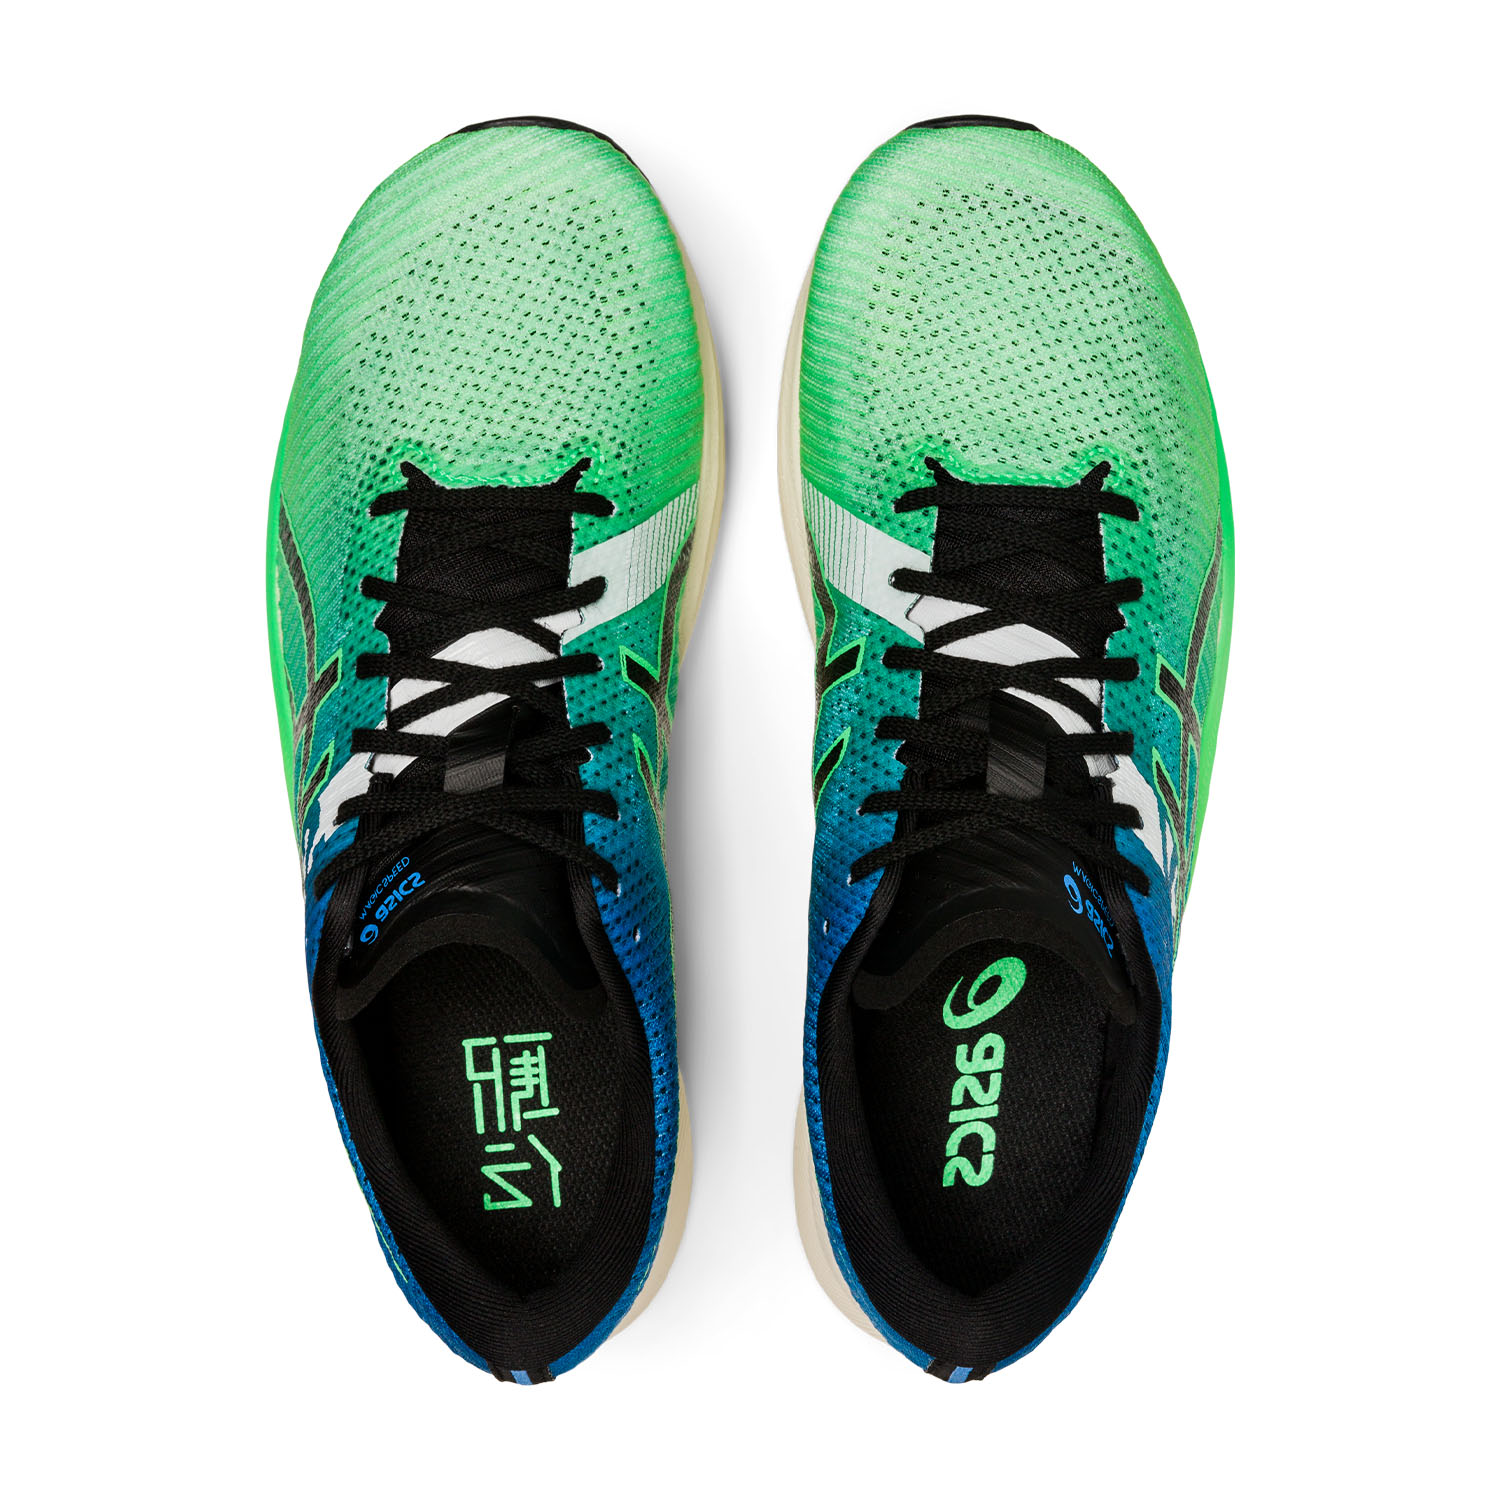 Asics Magic Speed 2 Ekiden Men's Running Shoes - New Leaf/Black